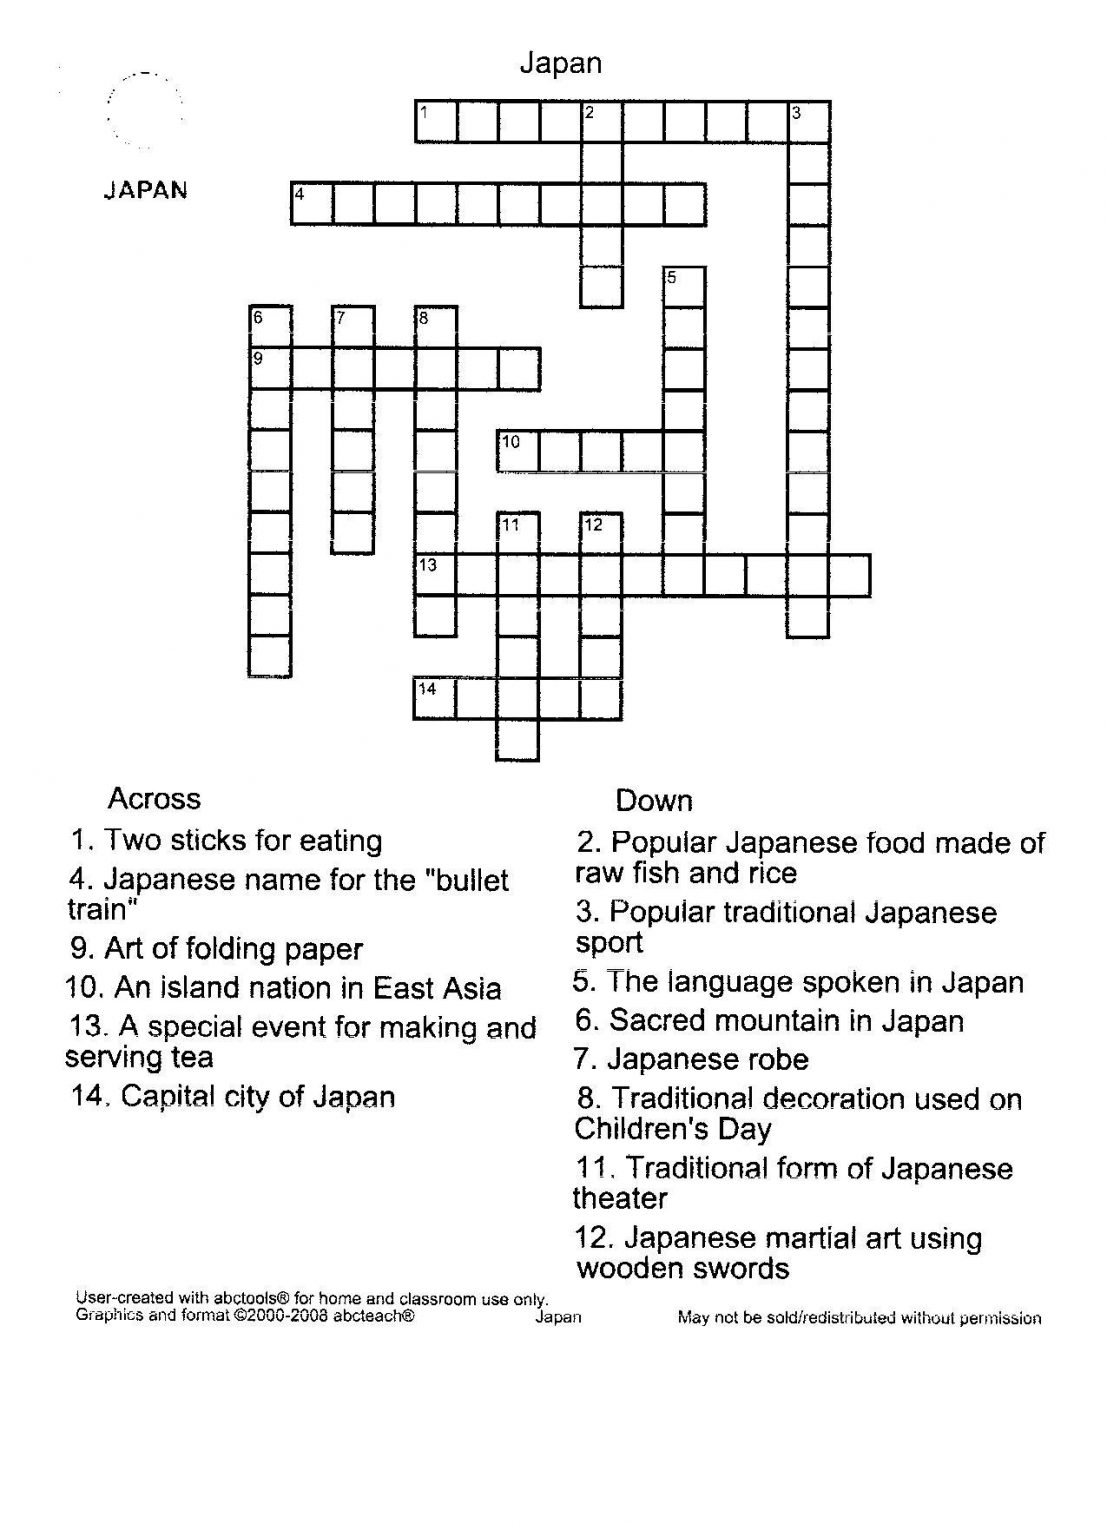 Crossword Puzzle Maker Printable